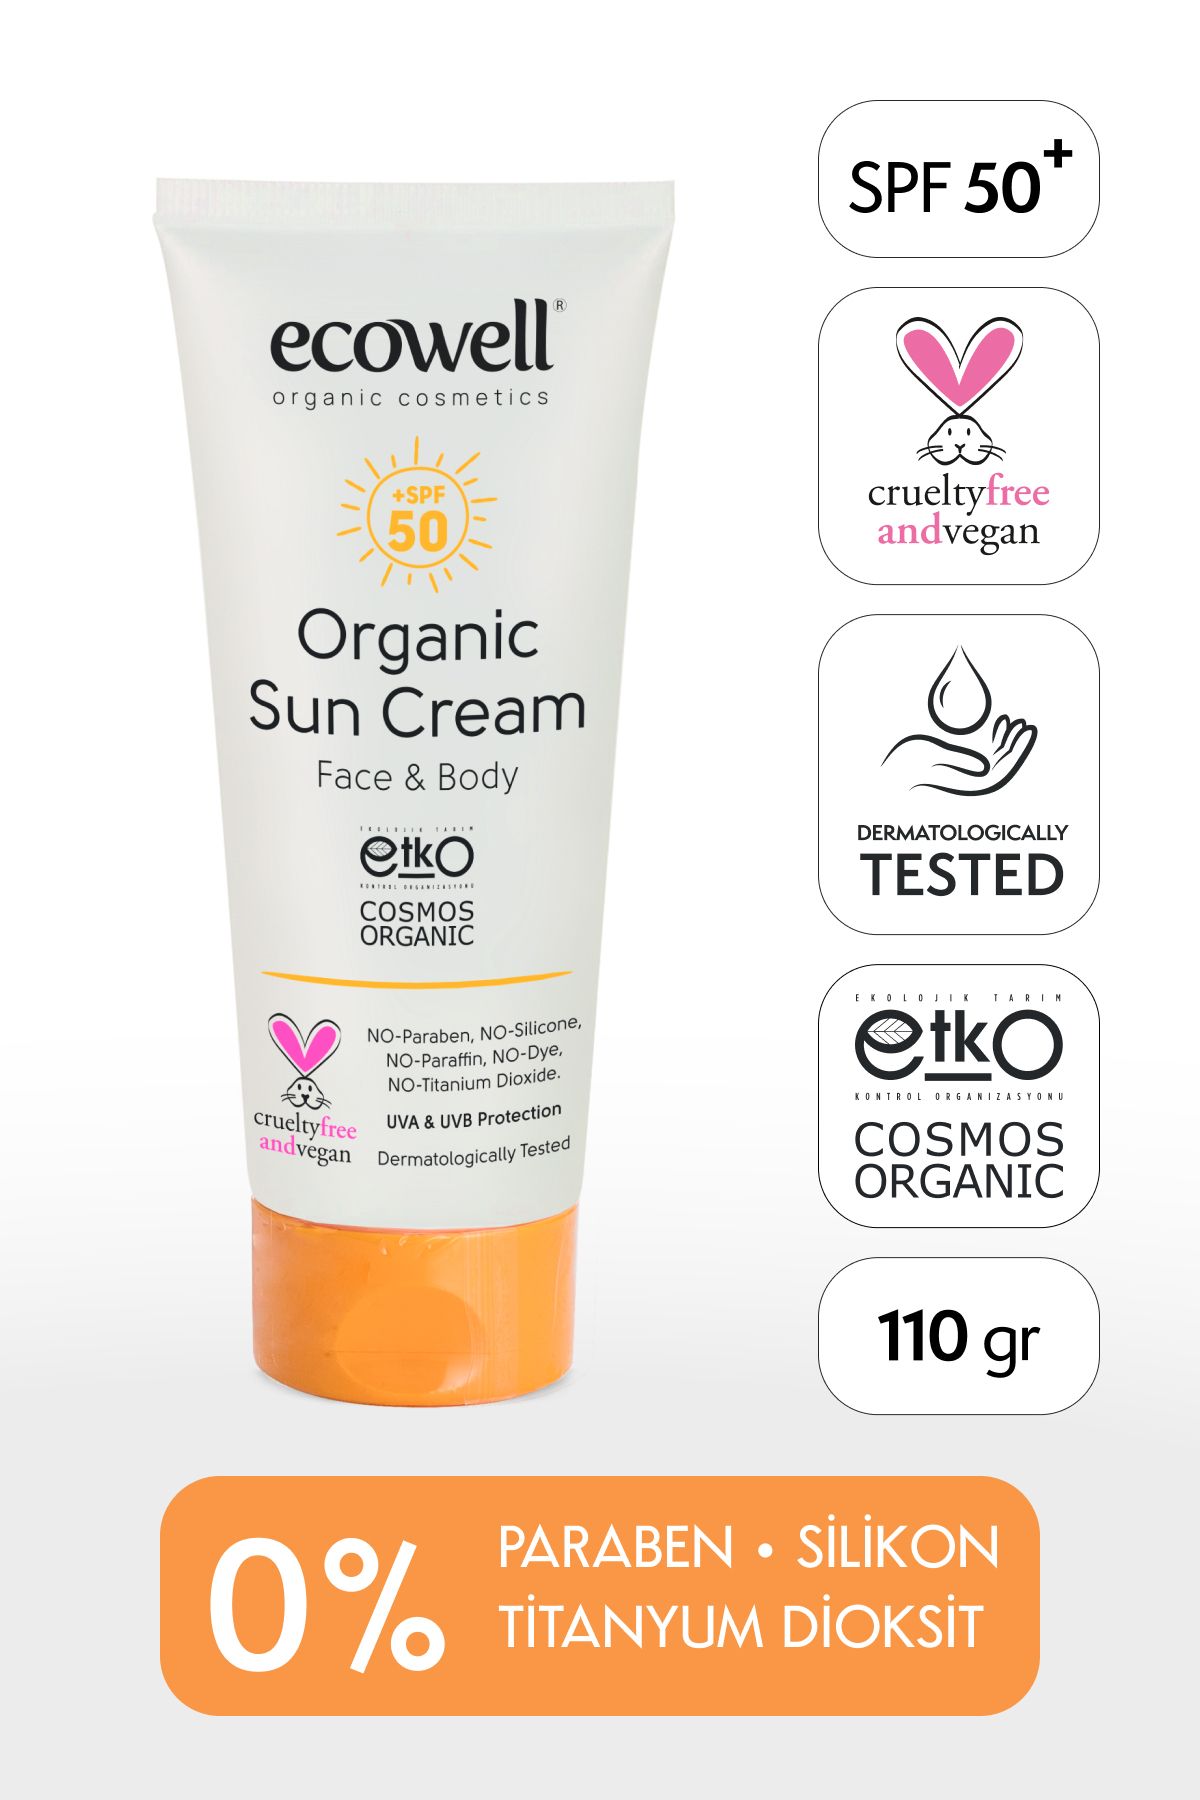 Ecowell Güneş Kremi Spf 50, Organik & Vegan Sertifikalı, Mineral Filtre, Yüz Ve Vücut, Uva Uvb Koruma, 110gr